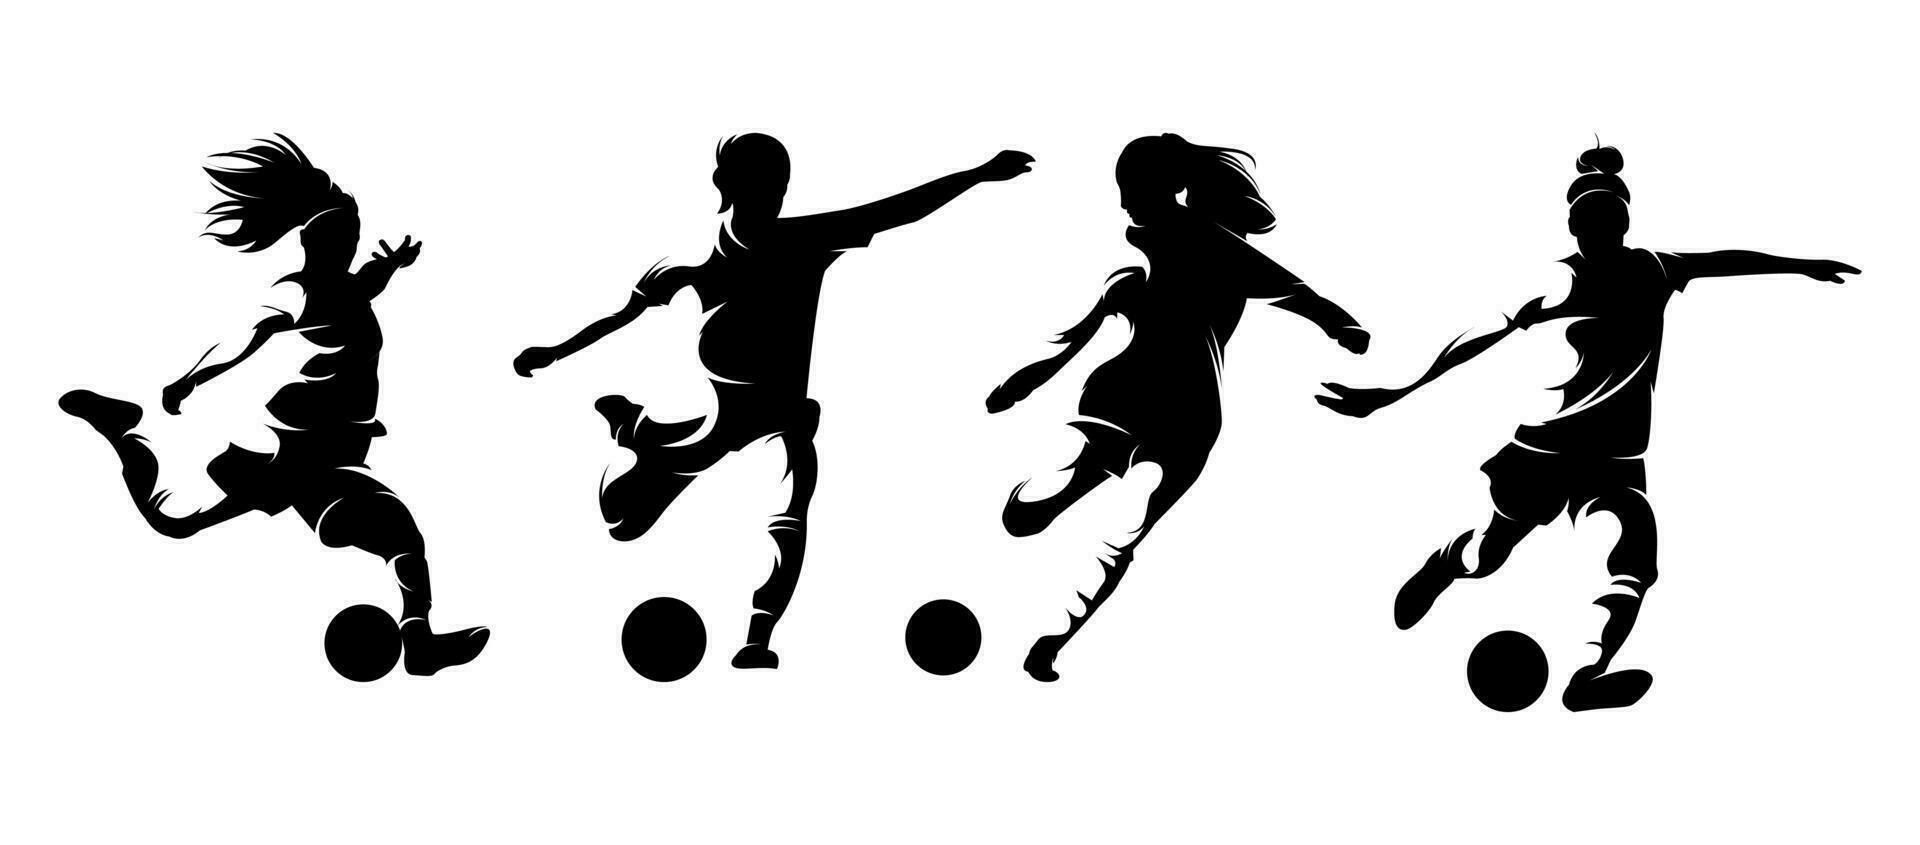 vetor conjunto silhuetas do fêmea futebol jogadoras chutando bola, abstrato isolado vetor silhueta, jogador de futebol logotipo